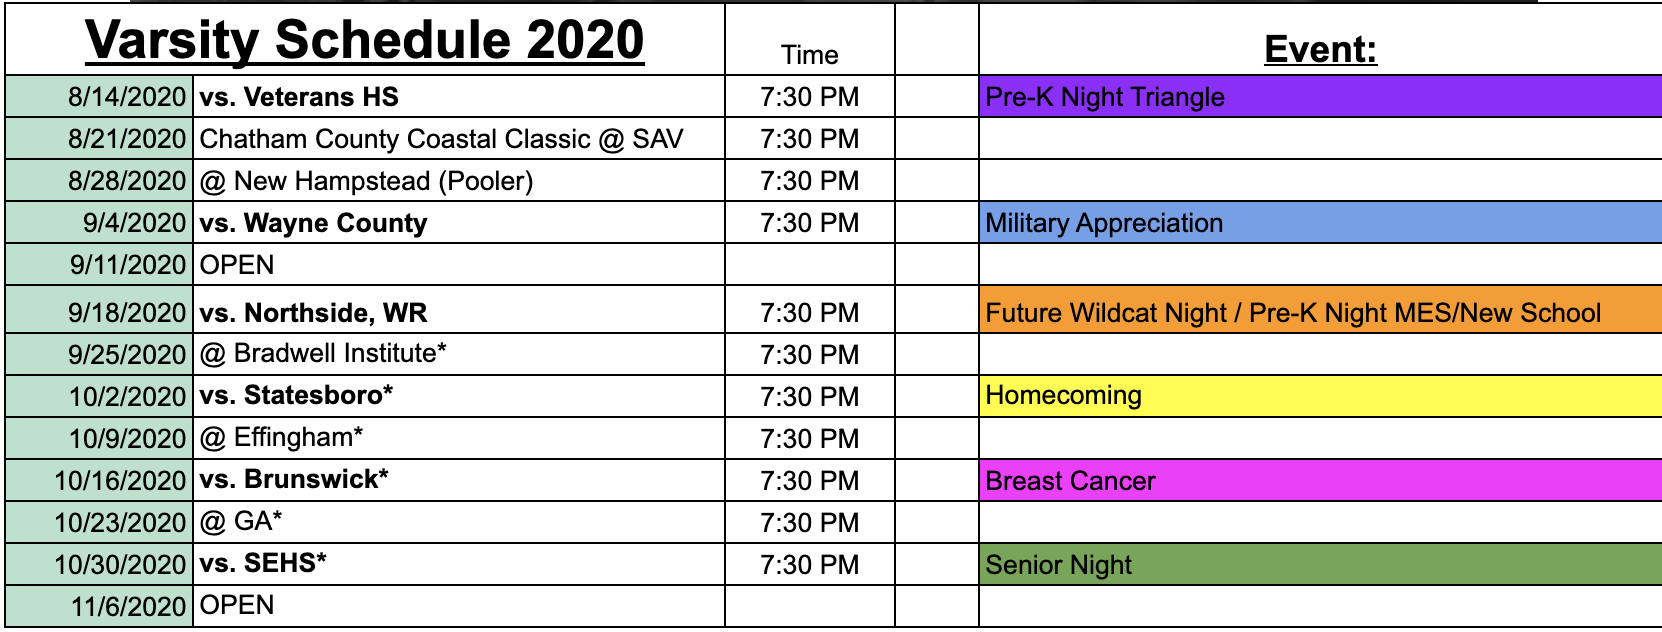 Varsity Schedule 2020